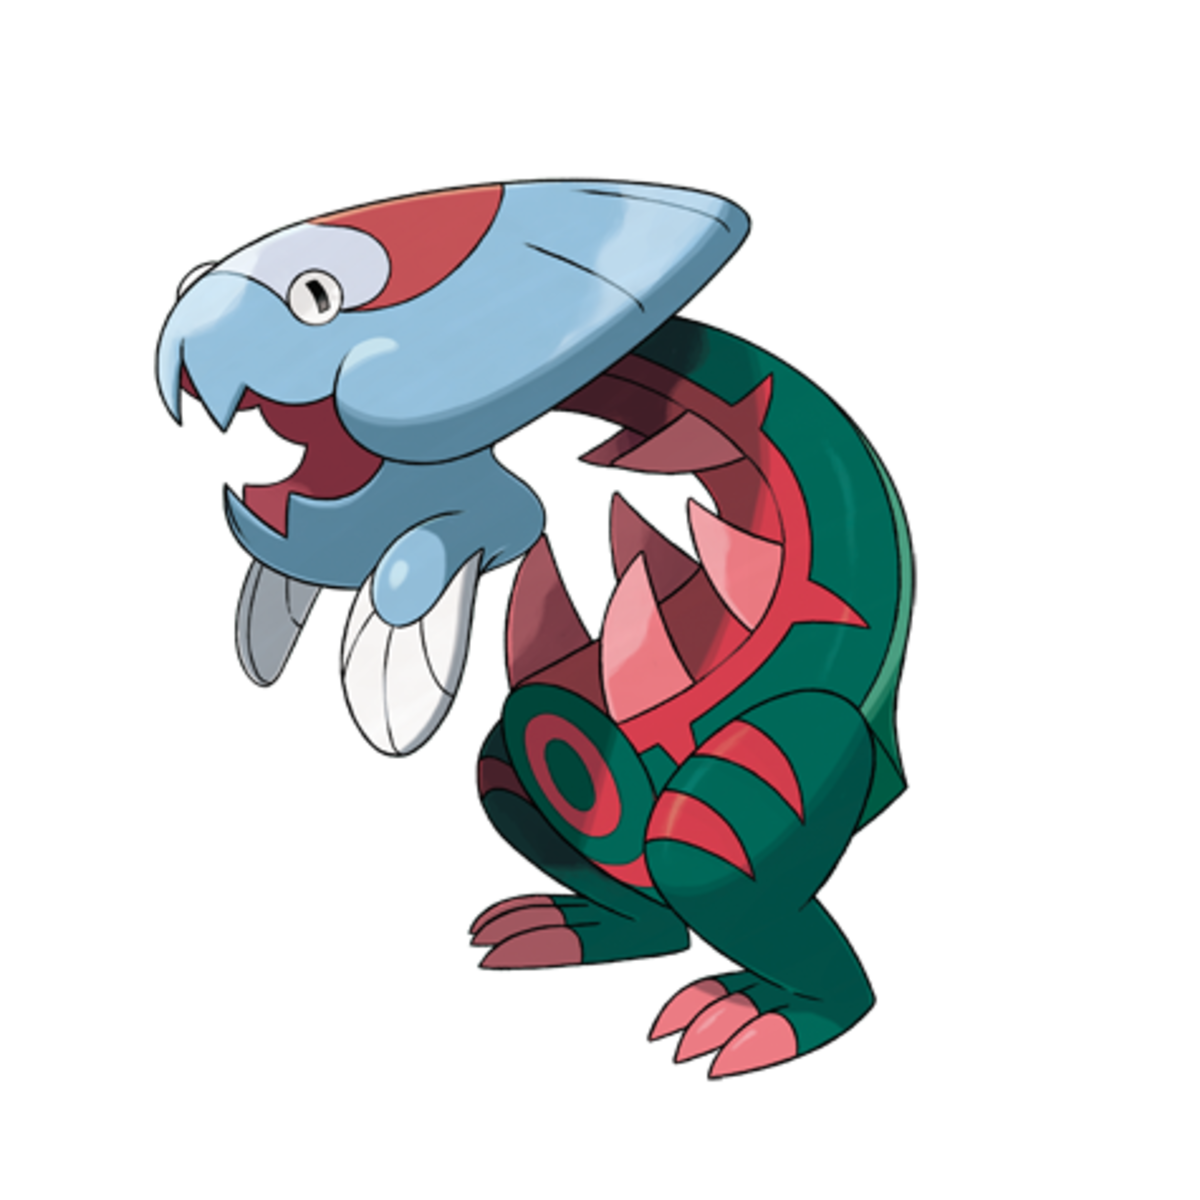 Dracovish, the "Fossil" Pokémon